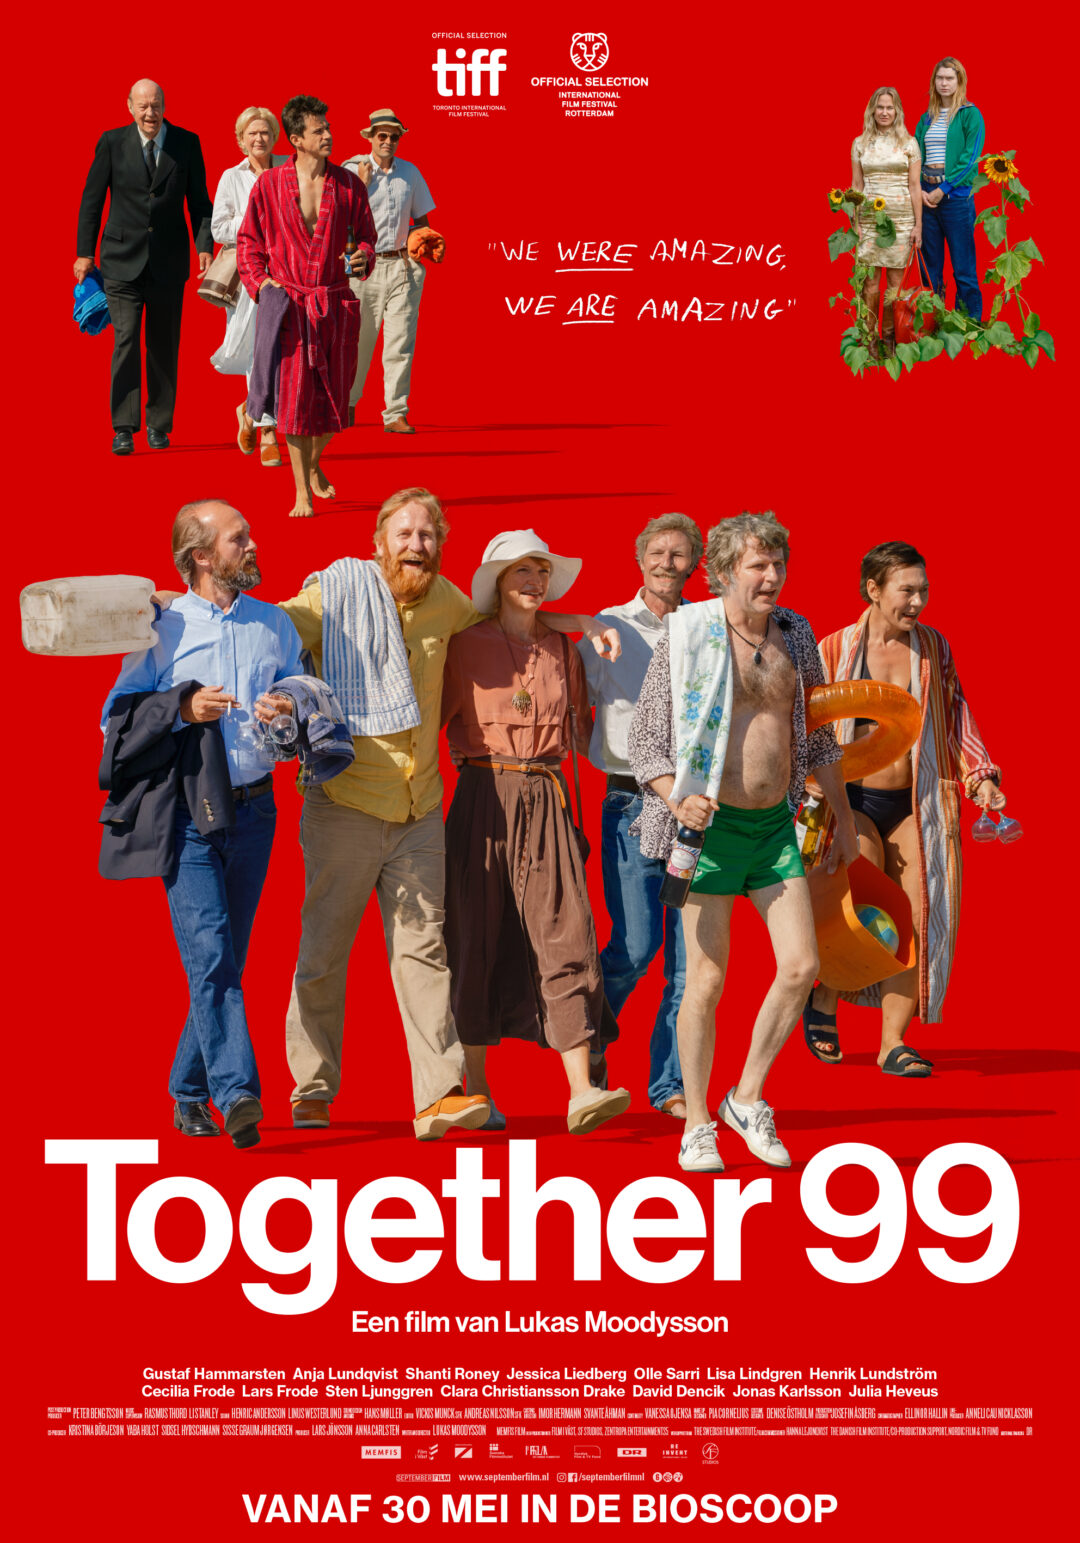 Together-99_ps_1_jpg_sd-high_September-Film.jpg